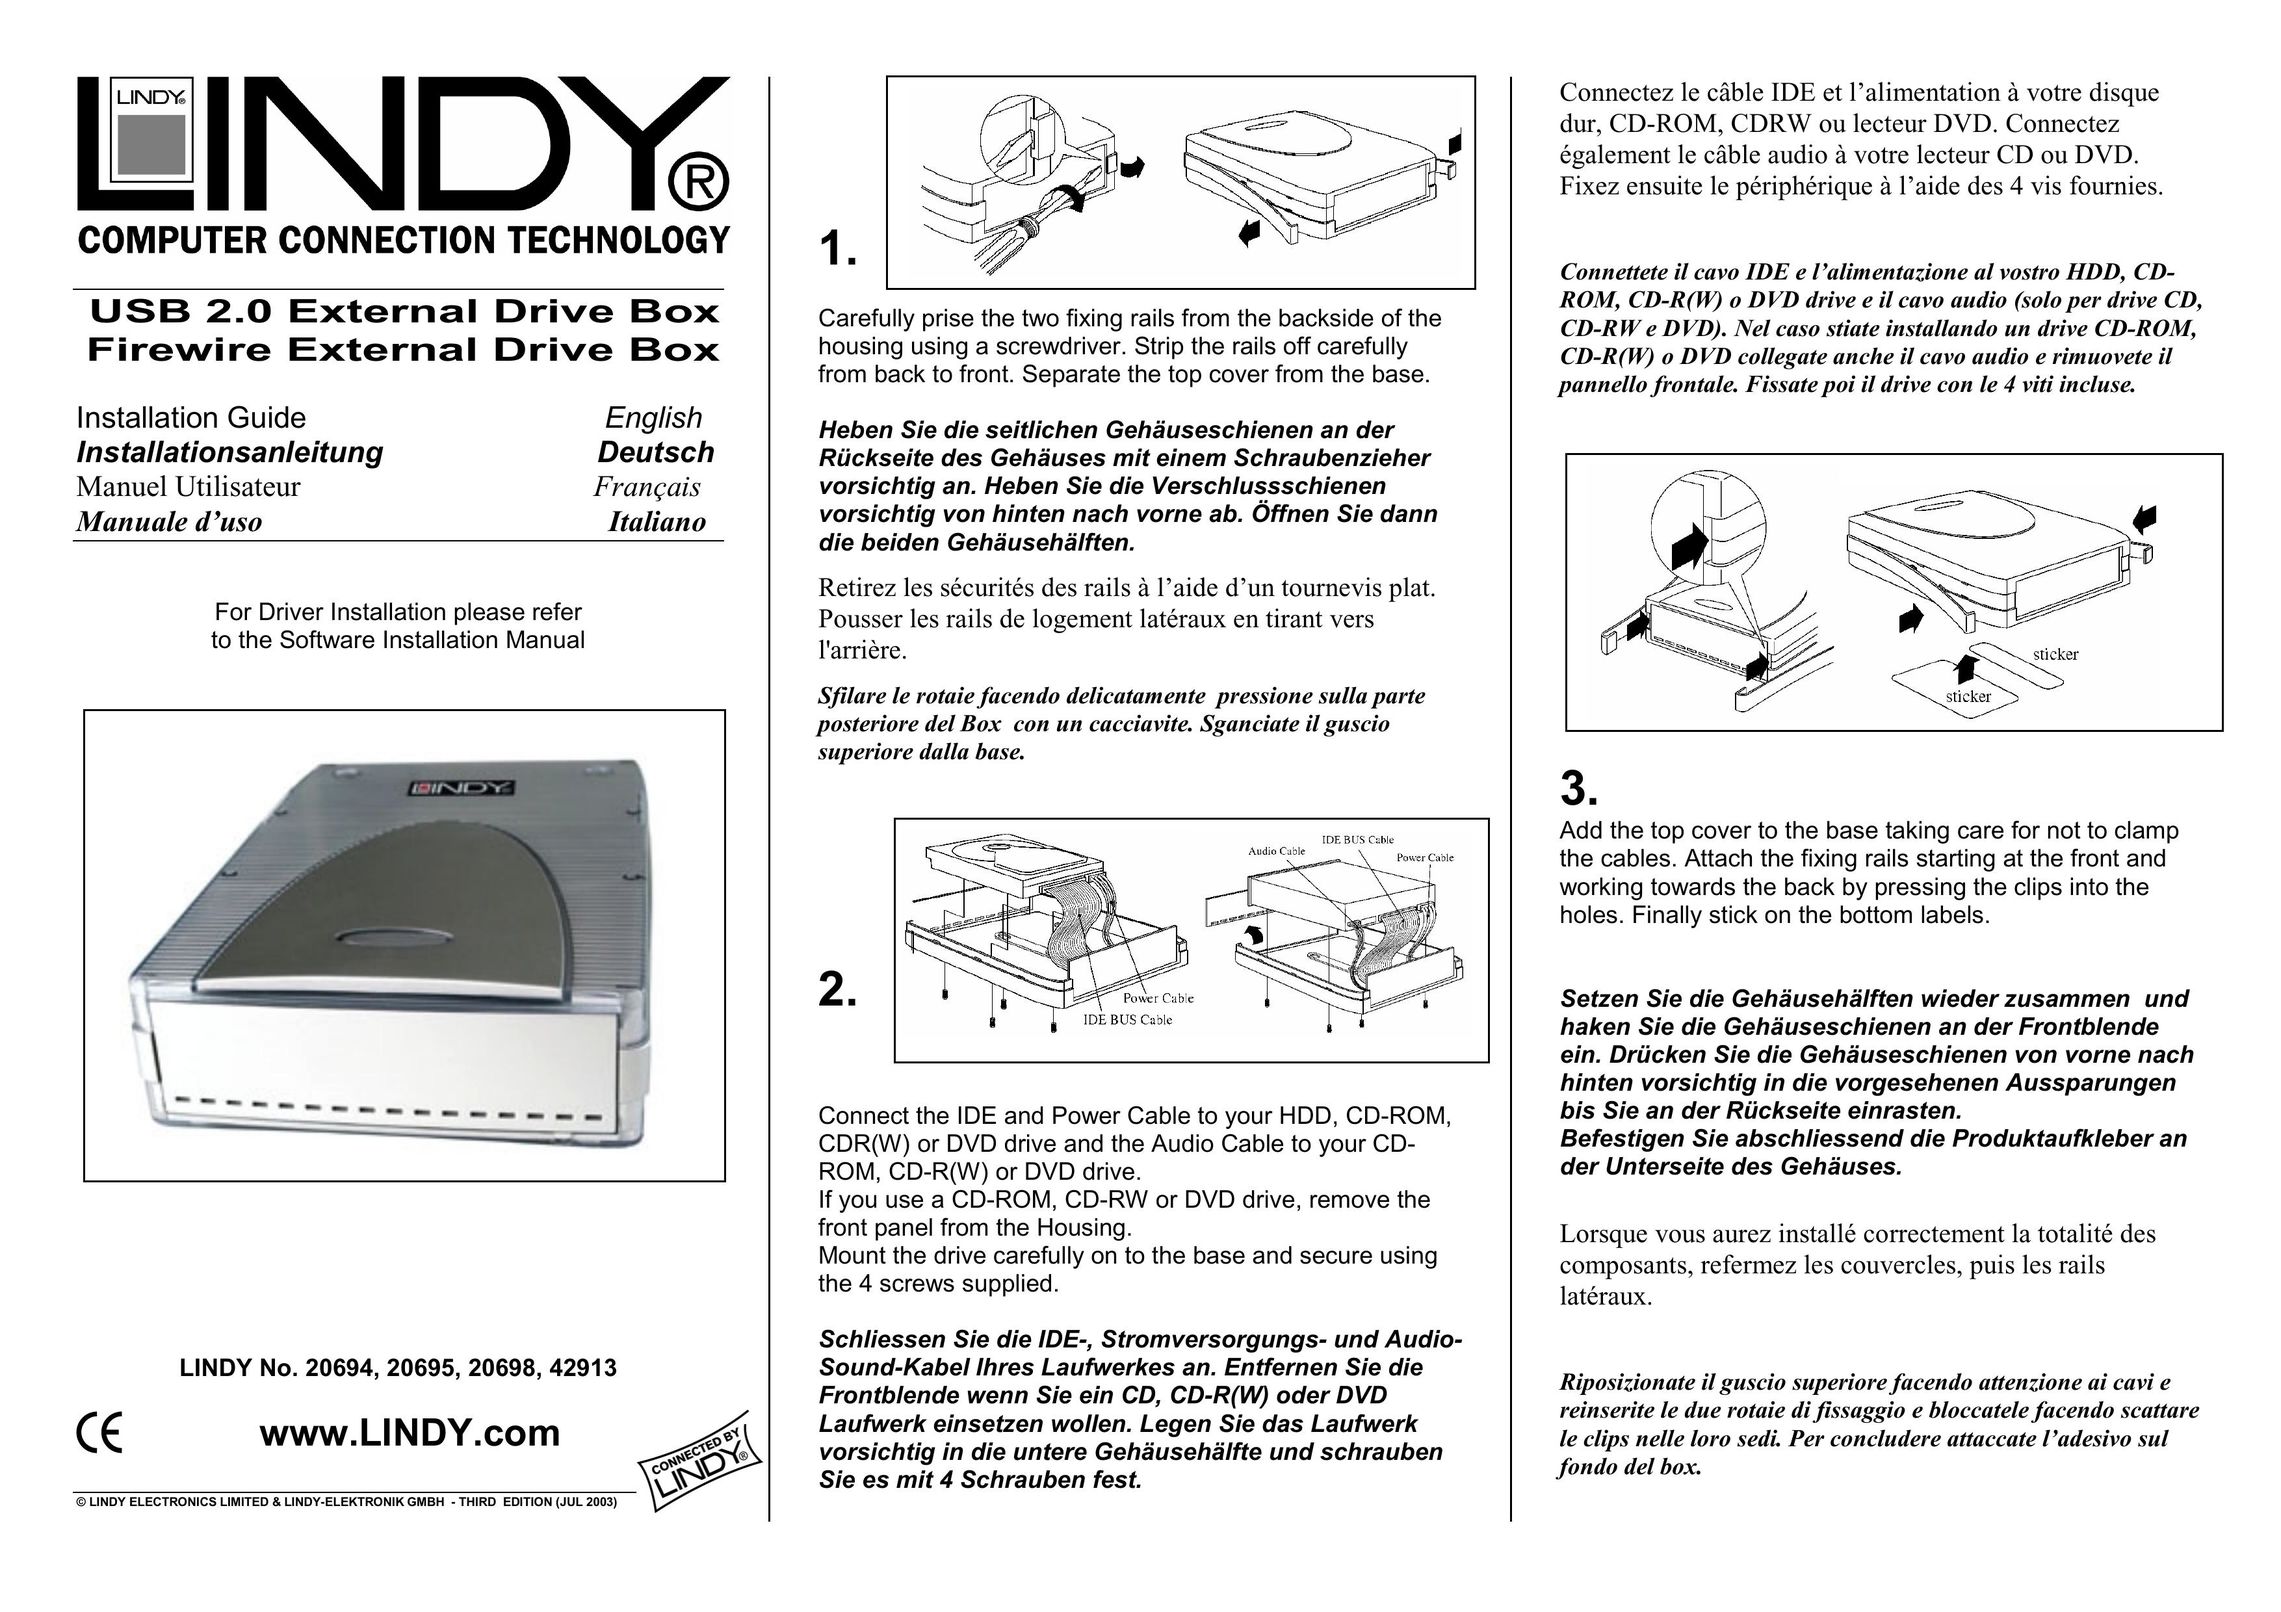 Lindy 42913 Computer Drive User Manual